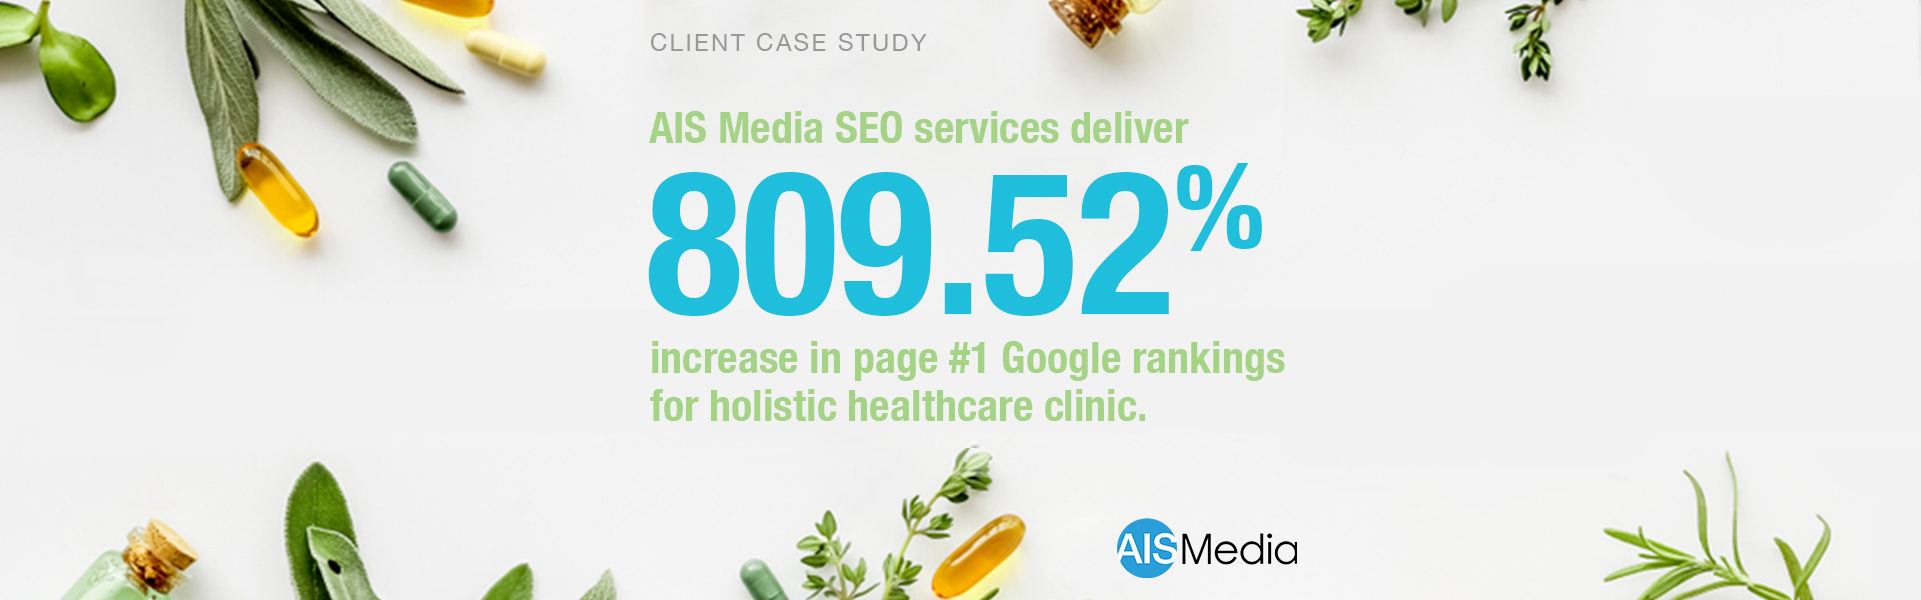 AIS Media SEO Strategy Page 1 Google